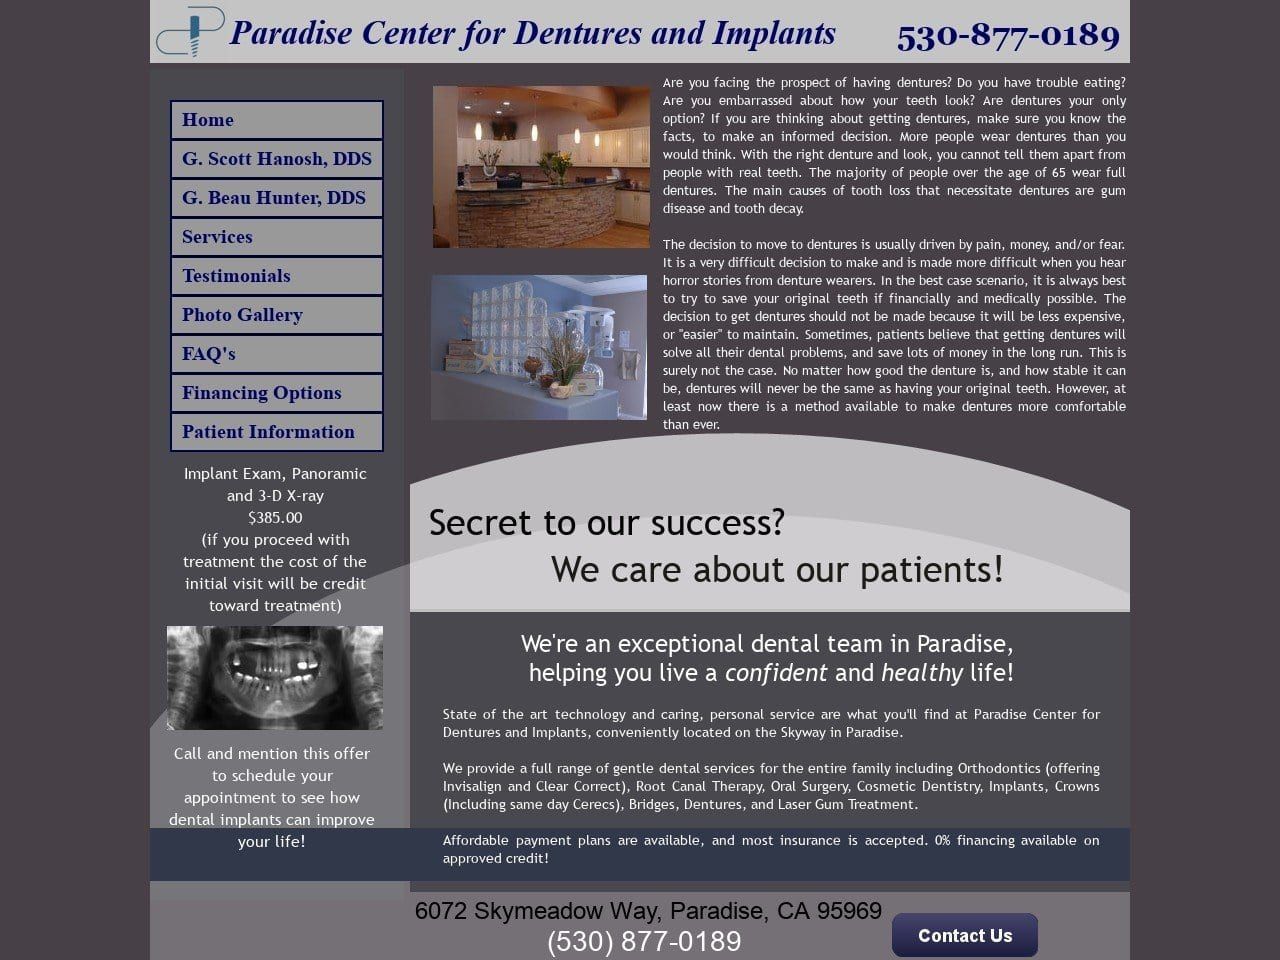 Paradise Center For Dentures Website Screenshot from paradisedenturesimplants.com